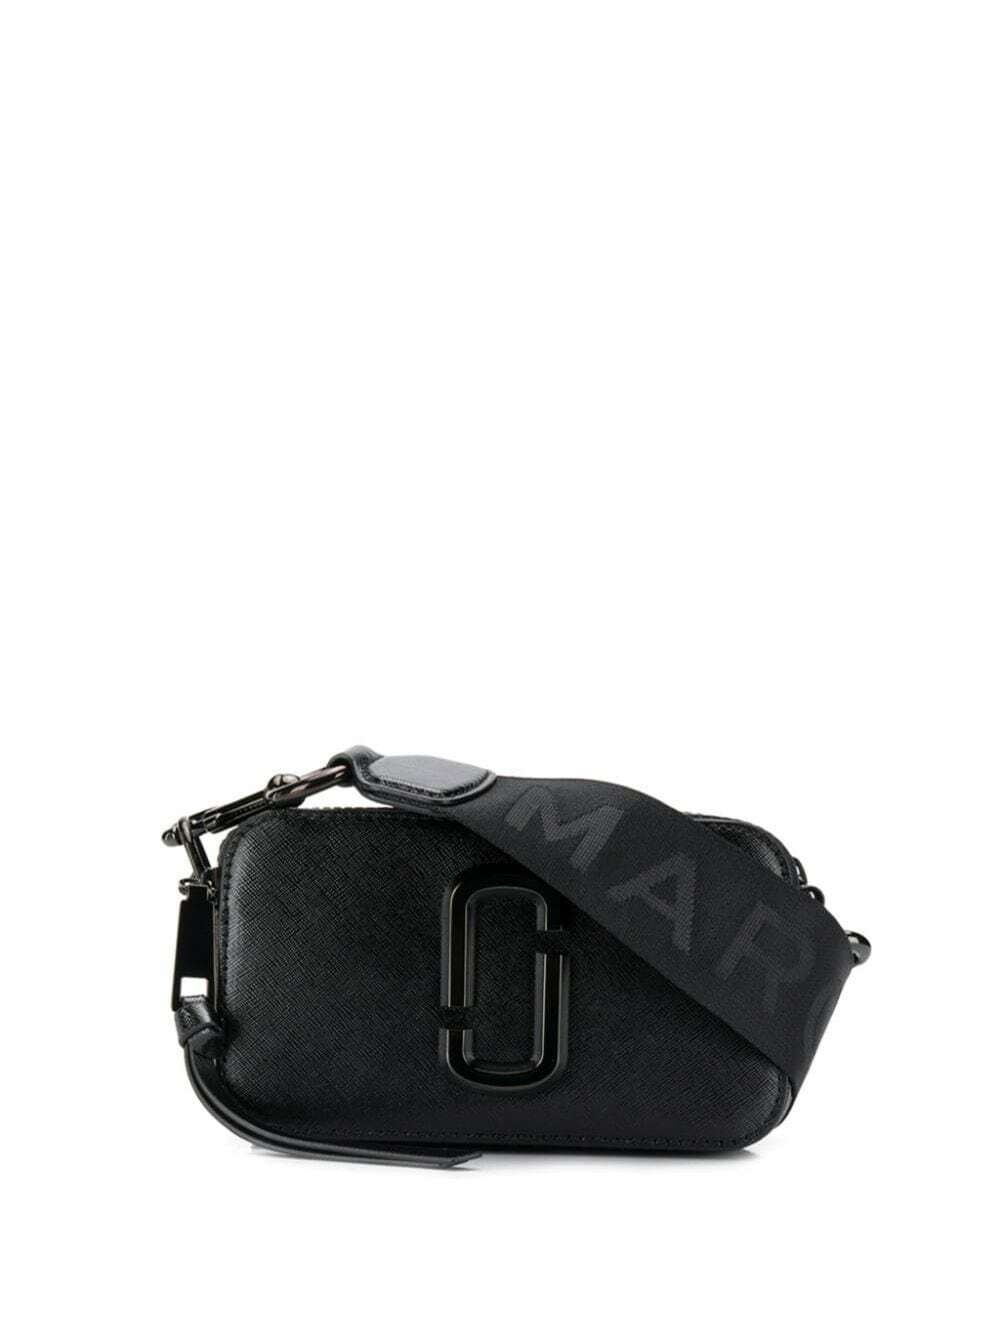 Marc Jacobs The Snapshot Crossbody Bag in Black